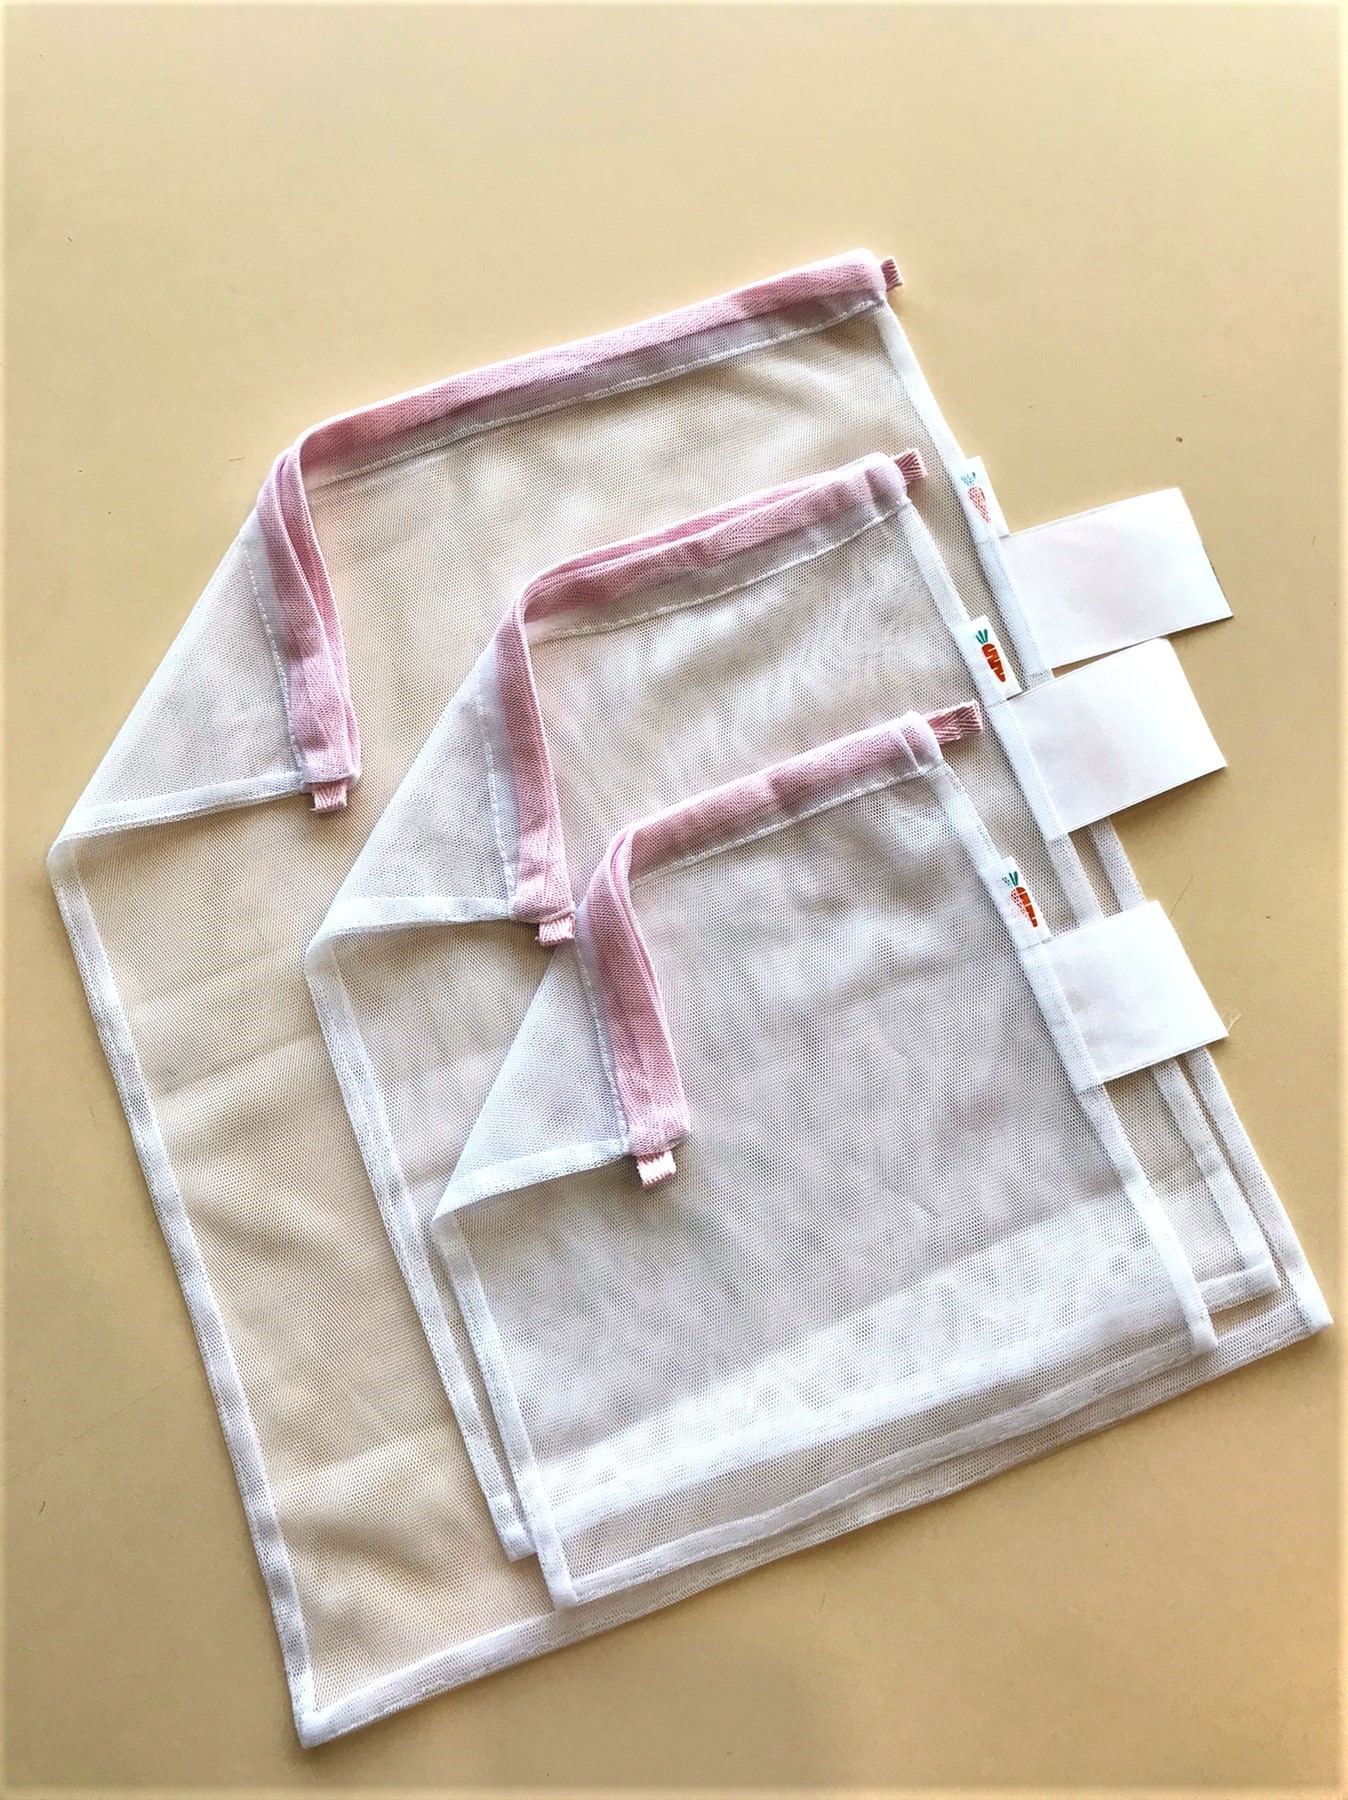 Reusable  tote mesh Bags - Set of 3, handmade,  sack, stringbag.